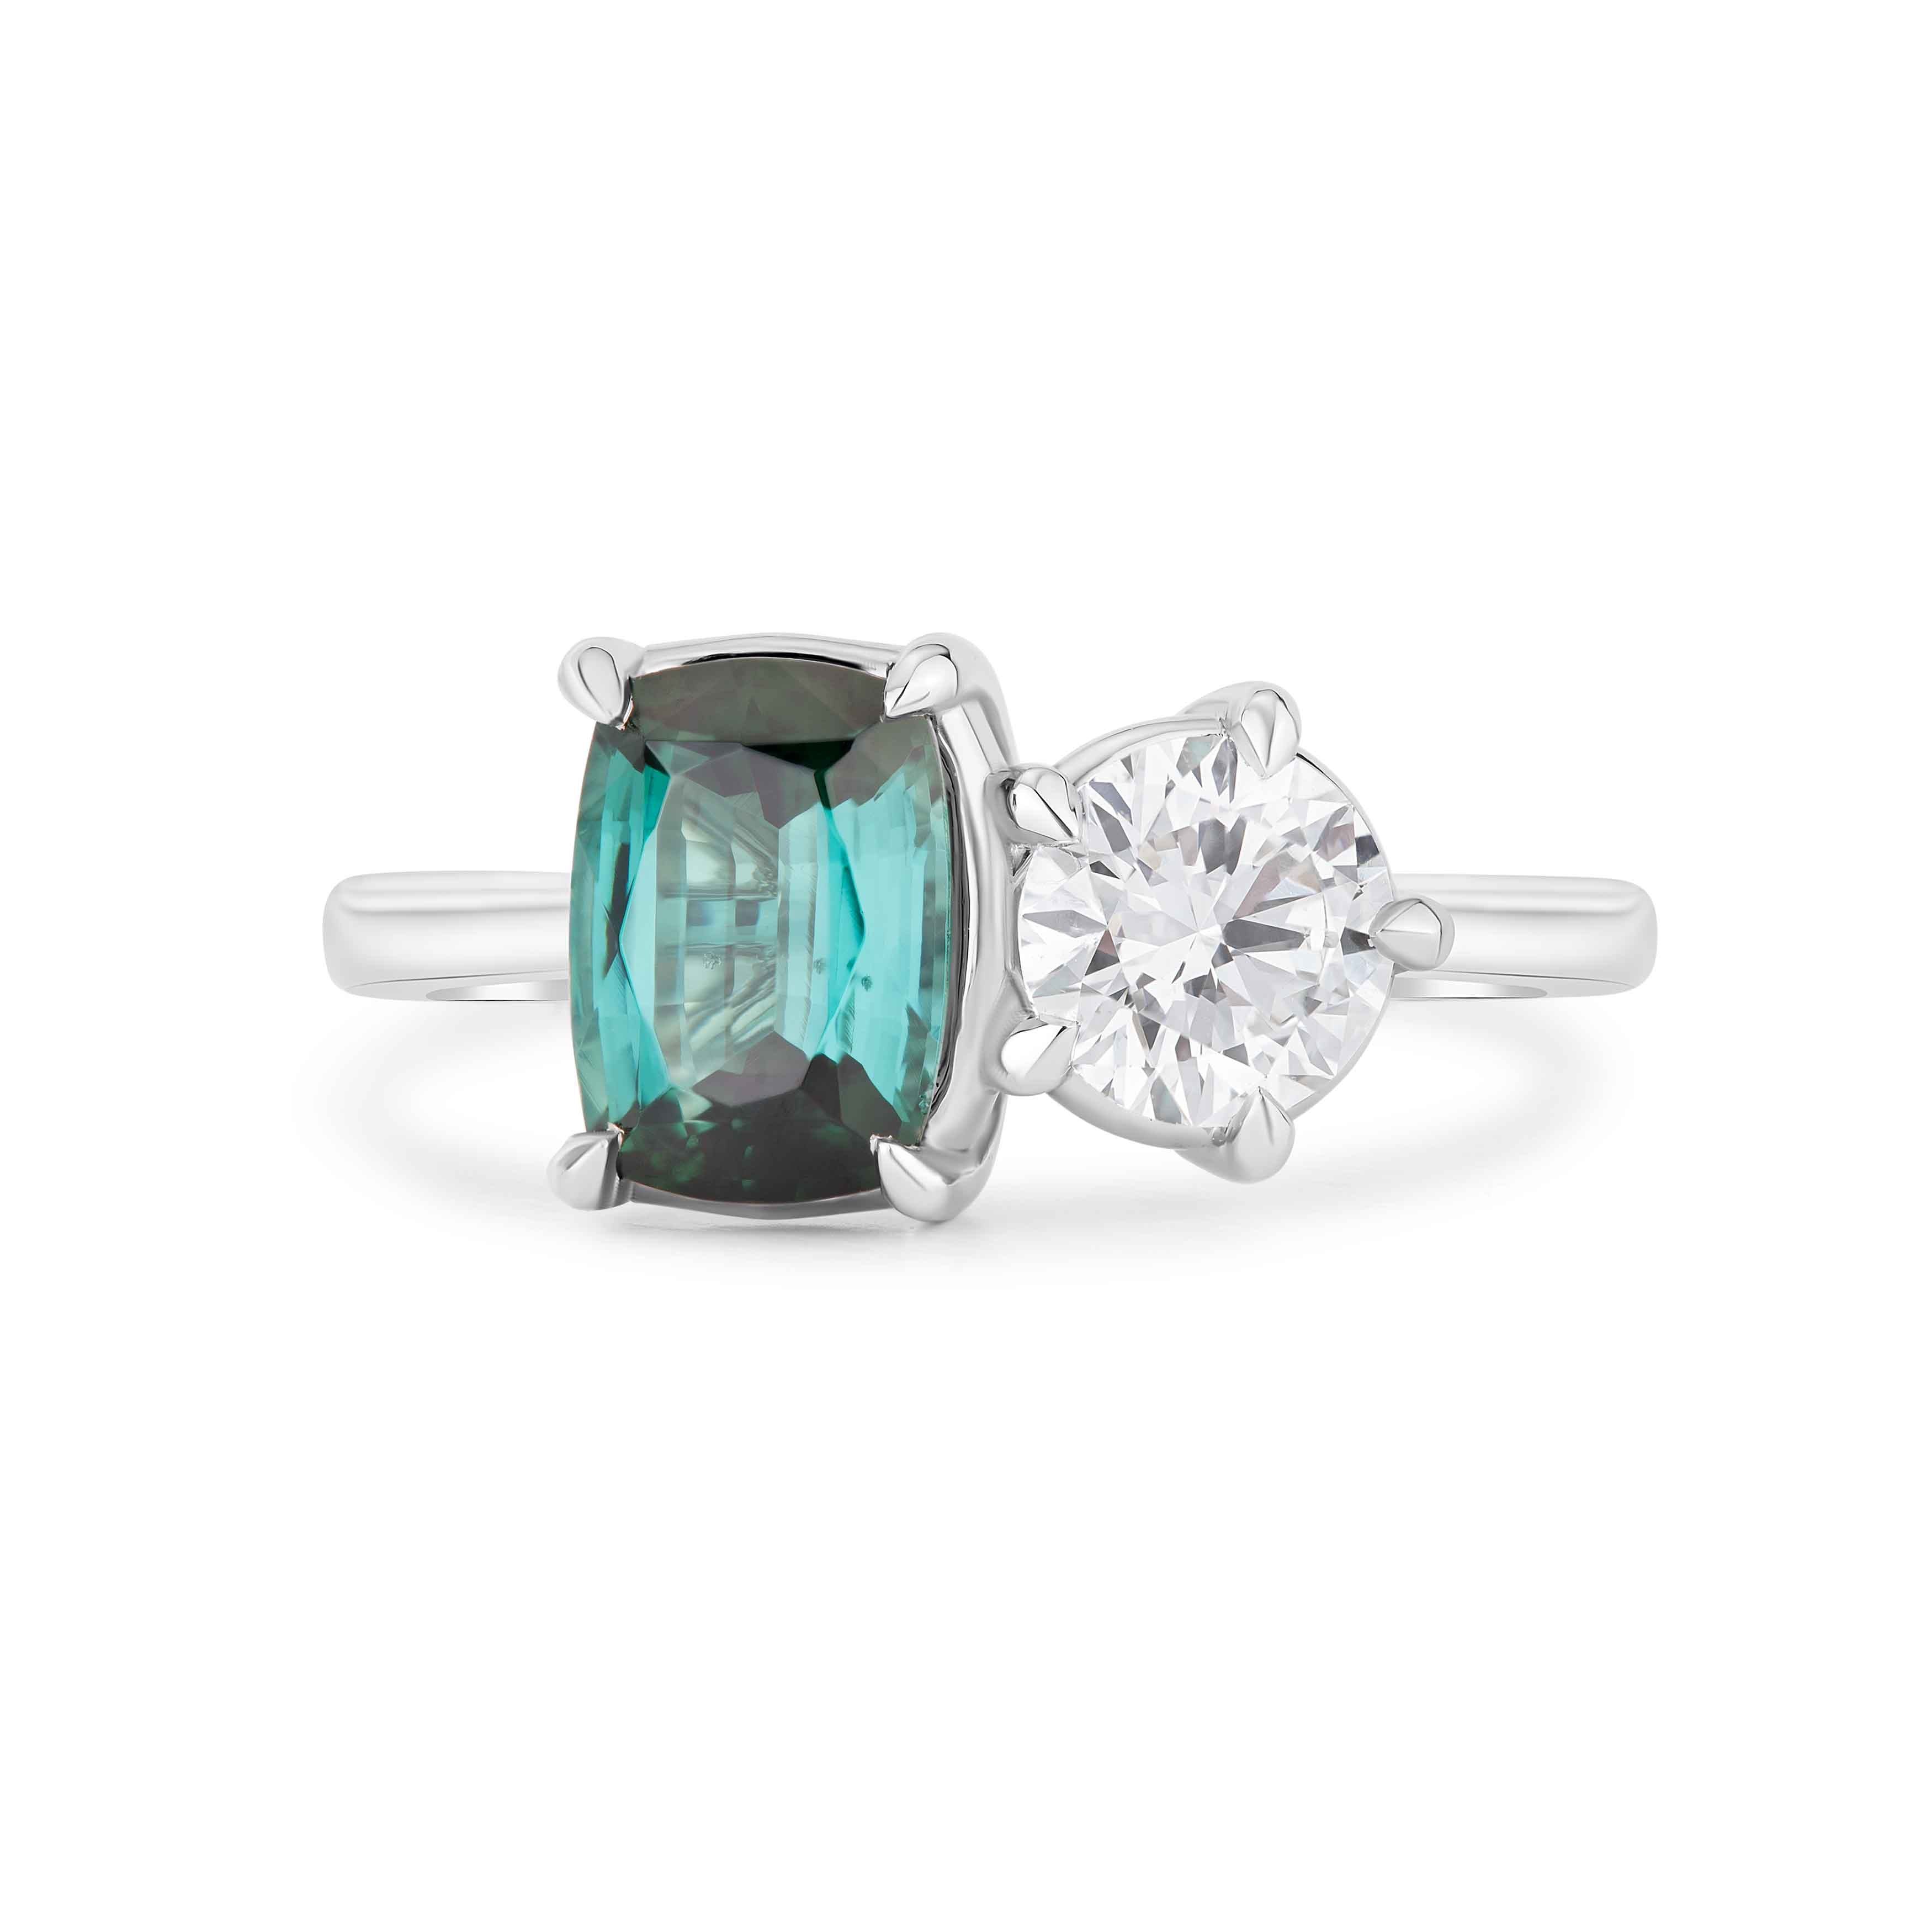 Moira Patience Fine Jewellery diamond and tourmaline toi et moi engagement ring in Edinburgh